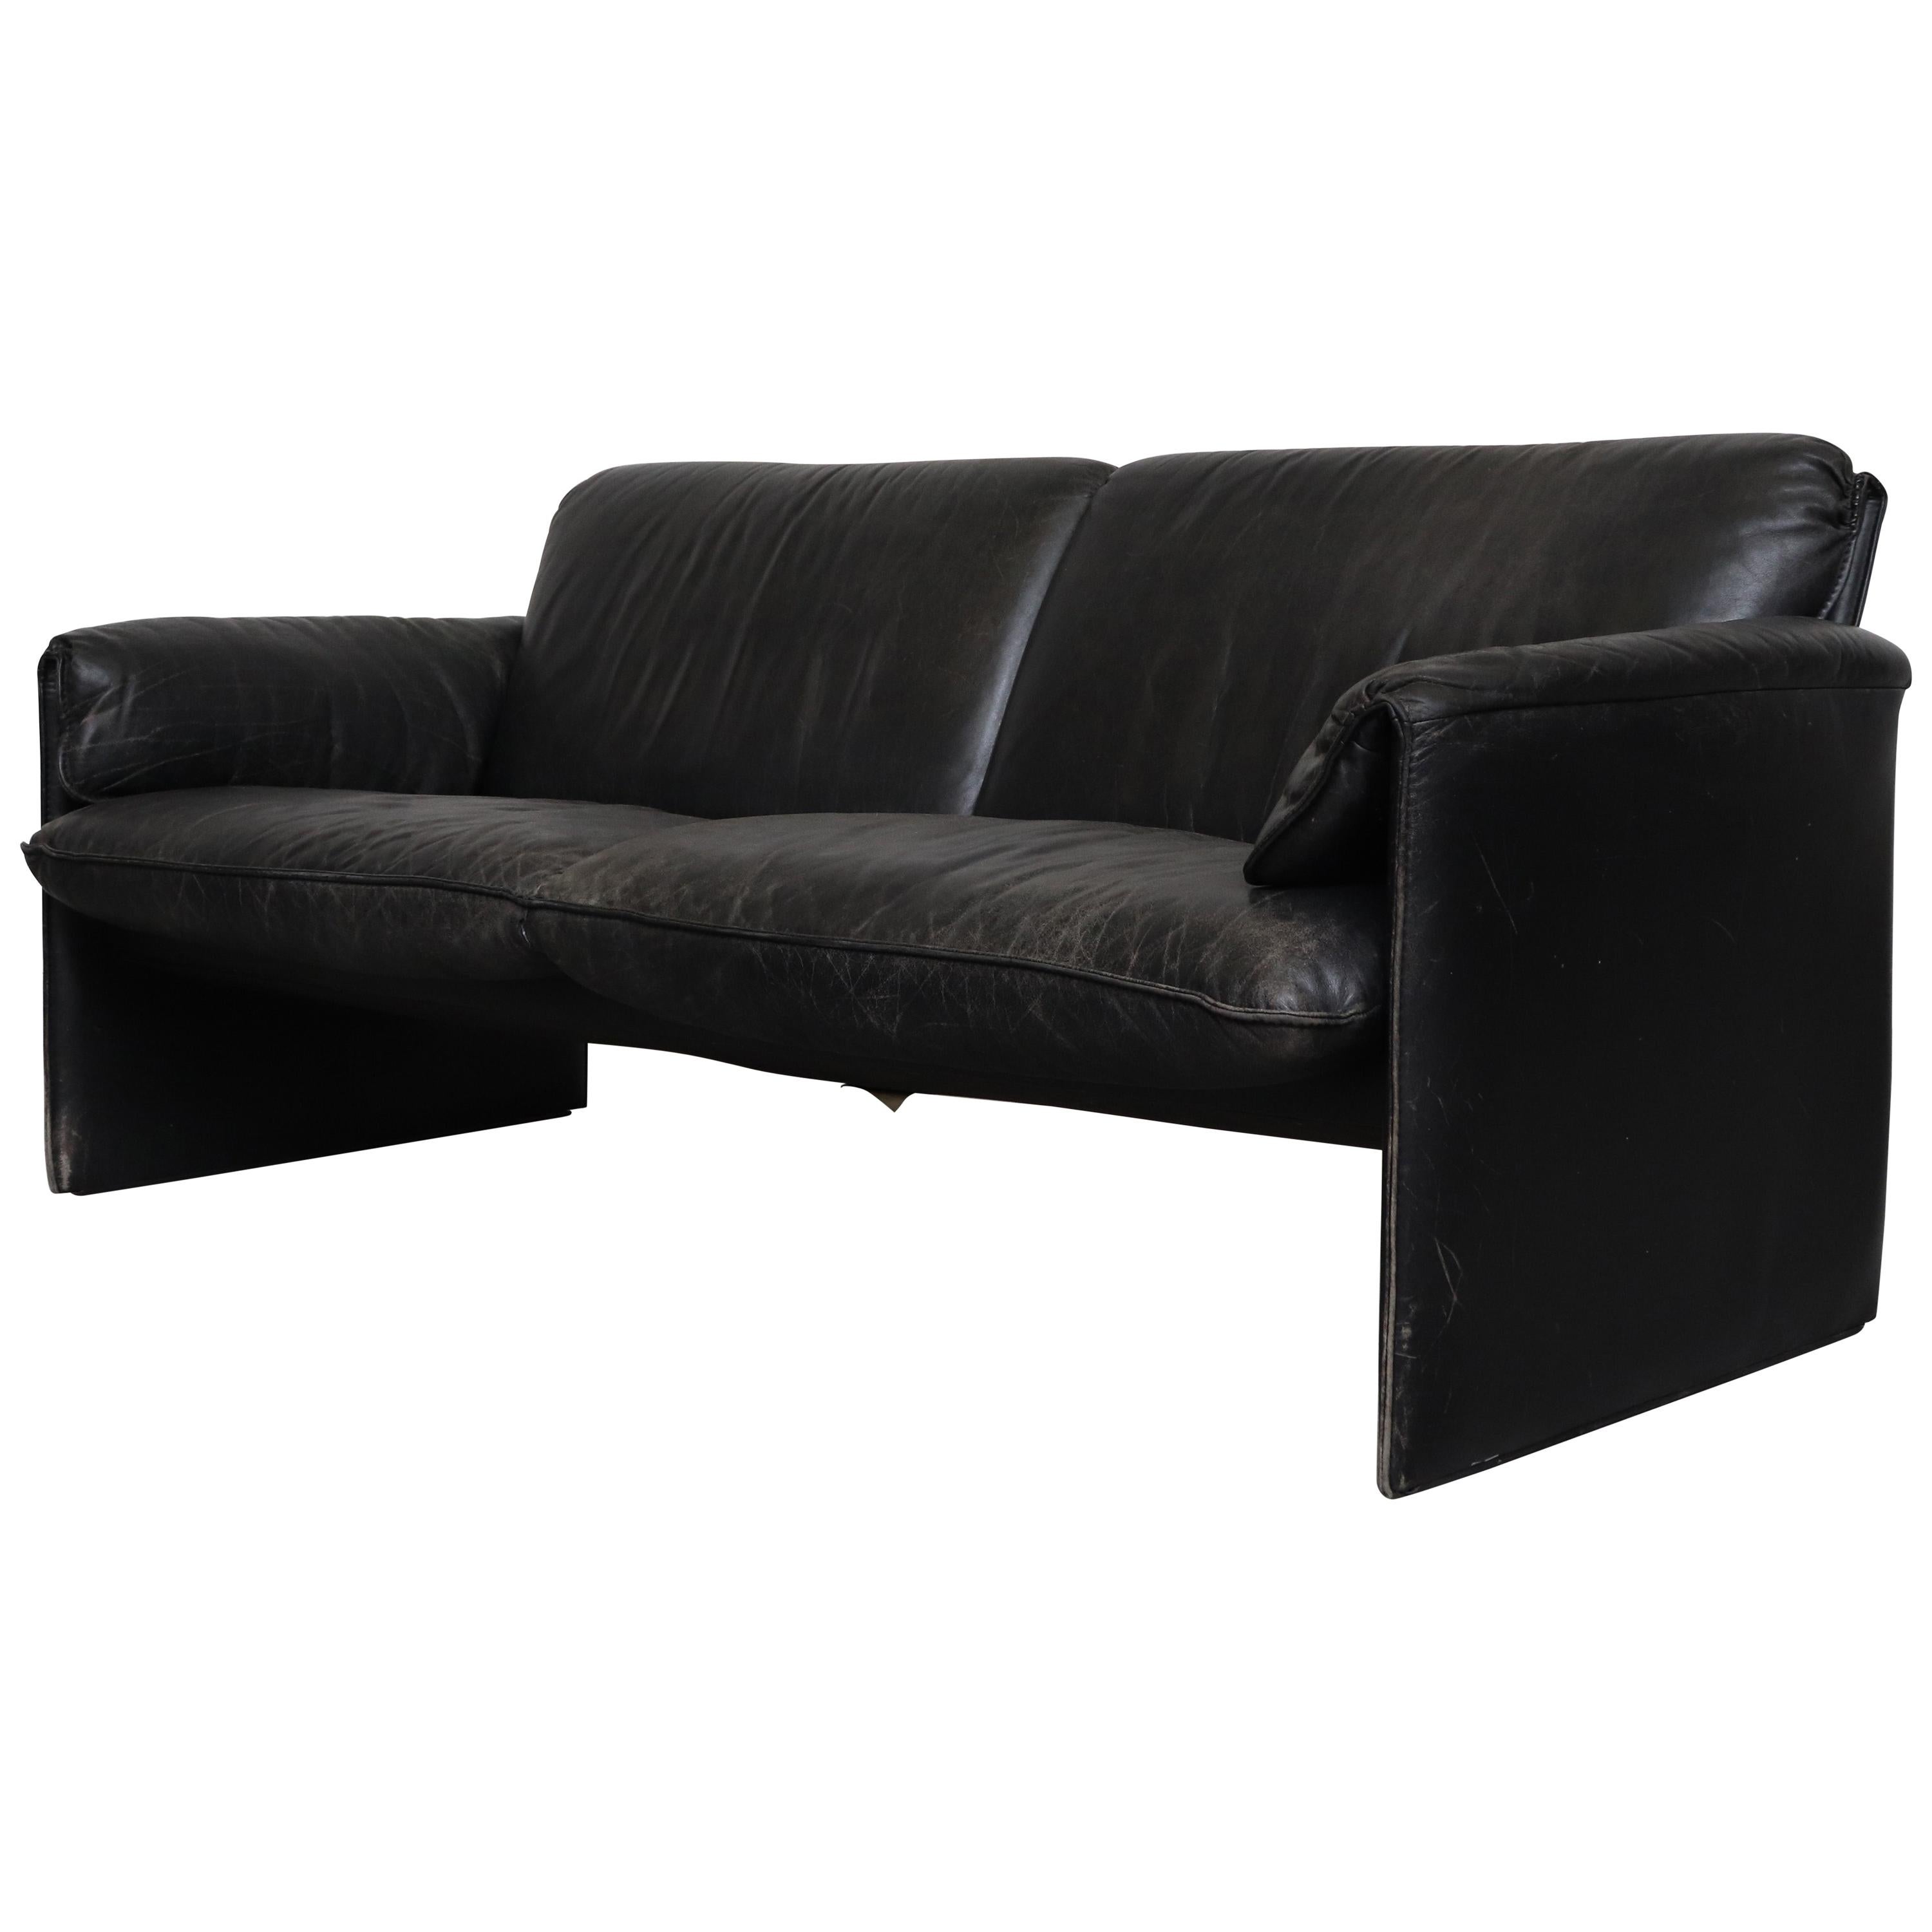 Leolux 'Bora Bora' Black Leather Sofa